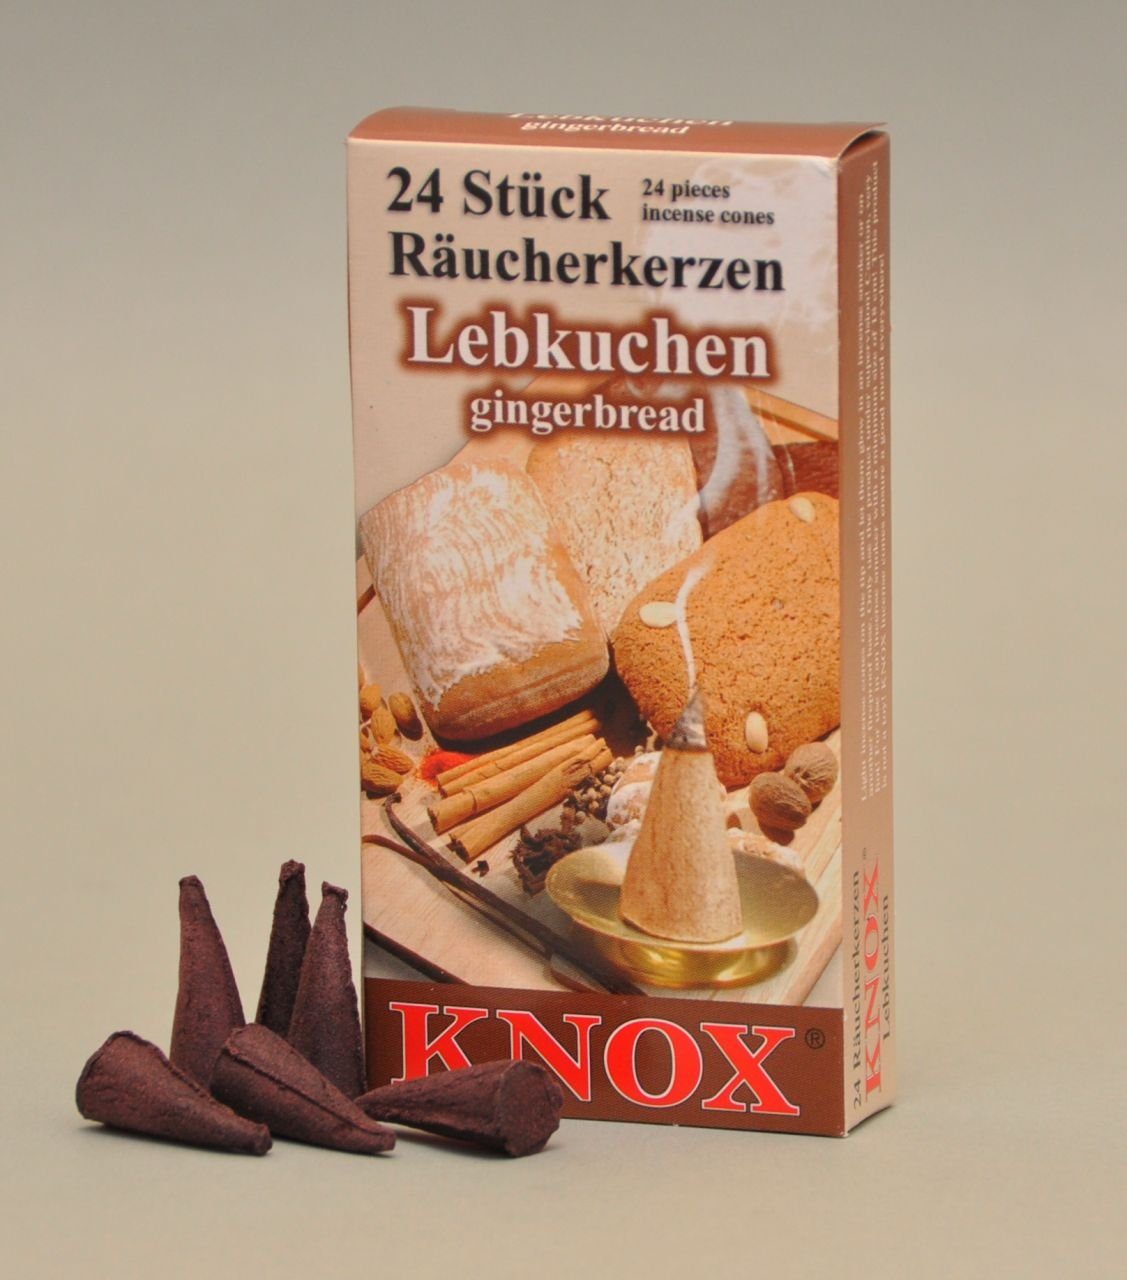 KNOX Räucherhaus Knox Räucherkerzen - Lebkuchen 24 Stück